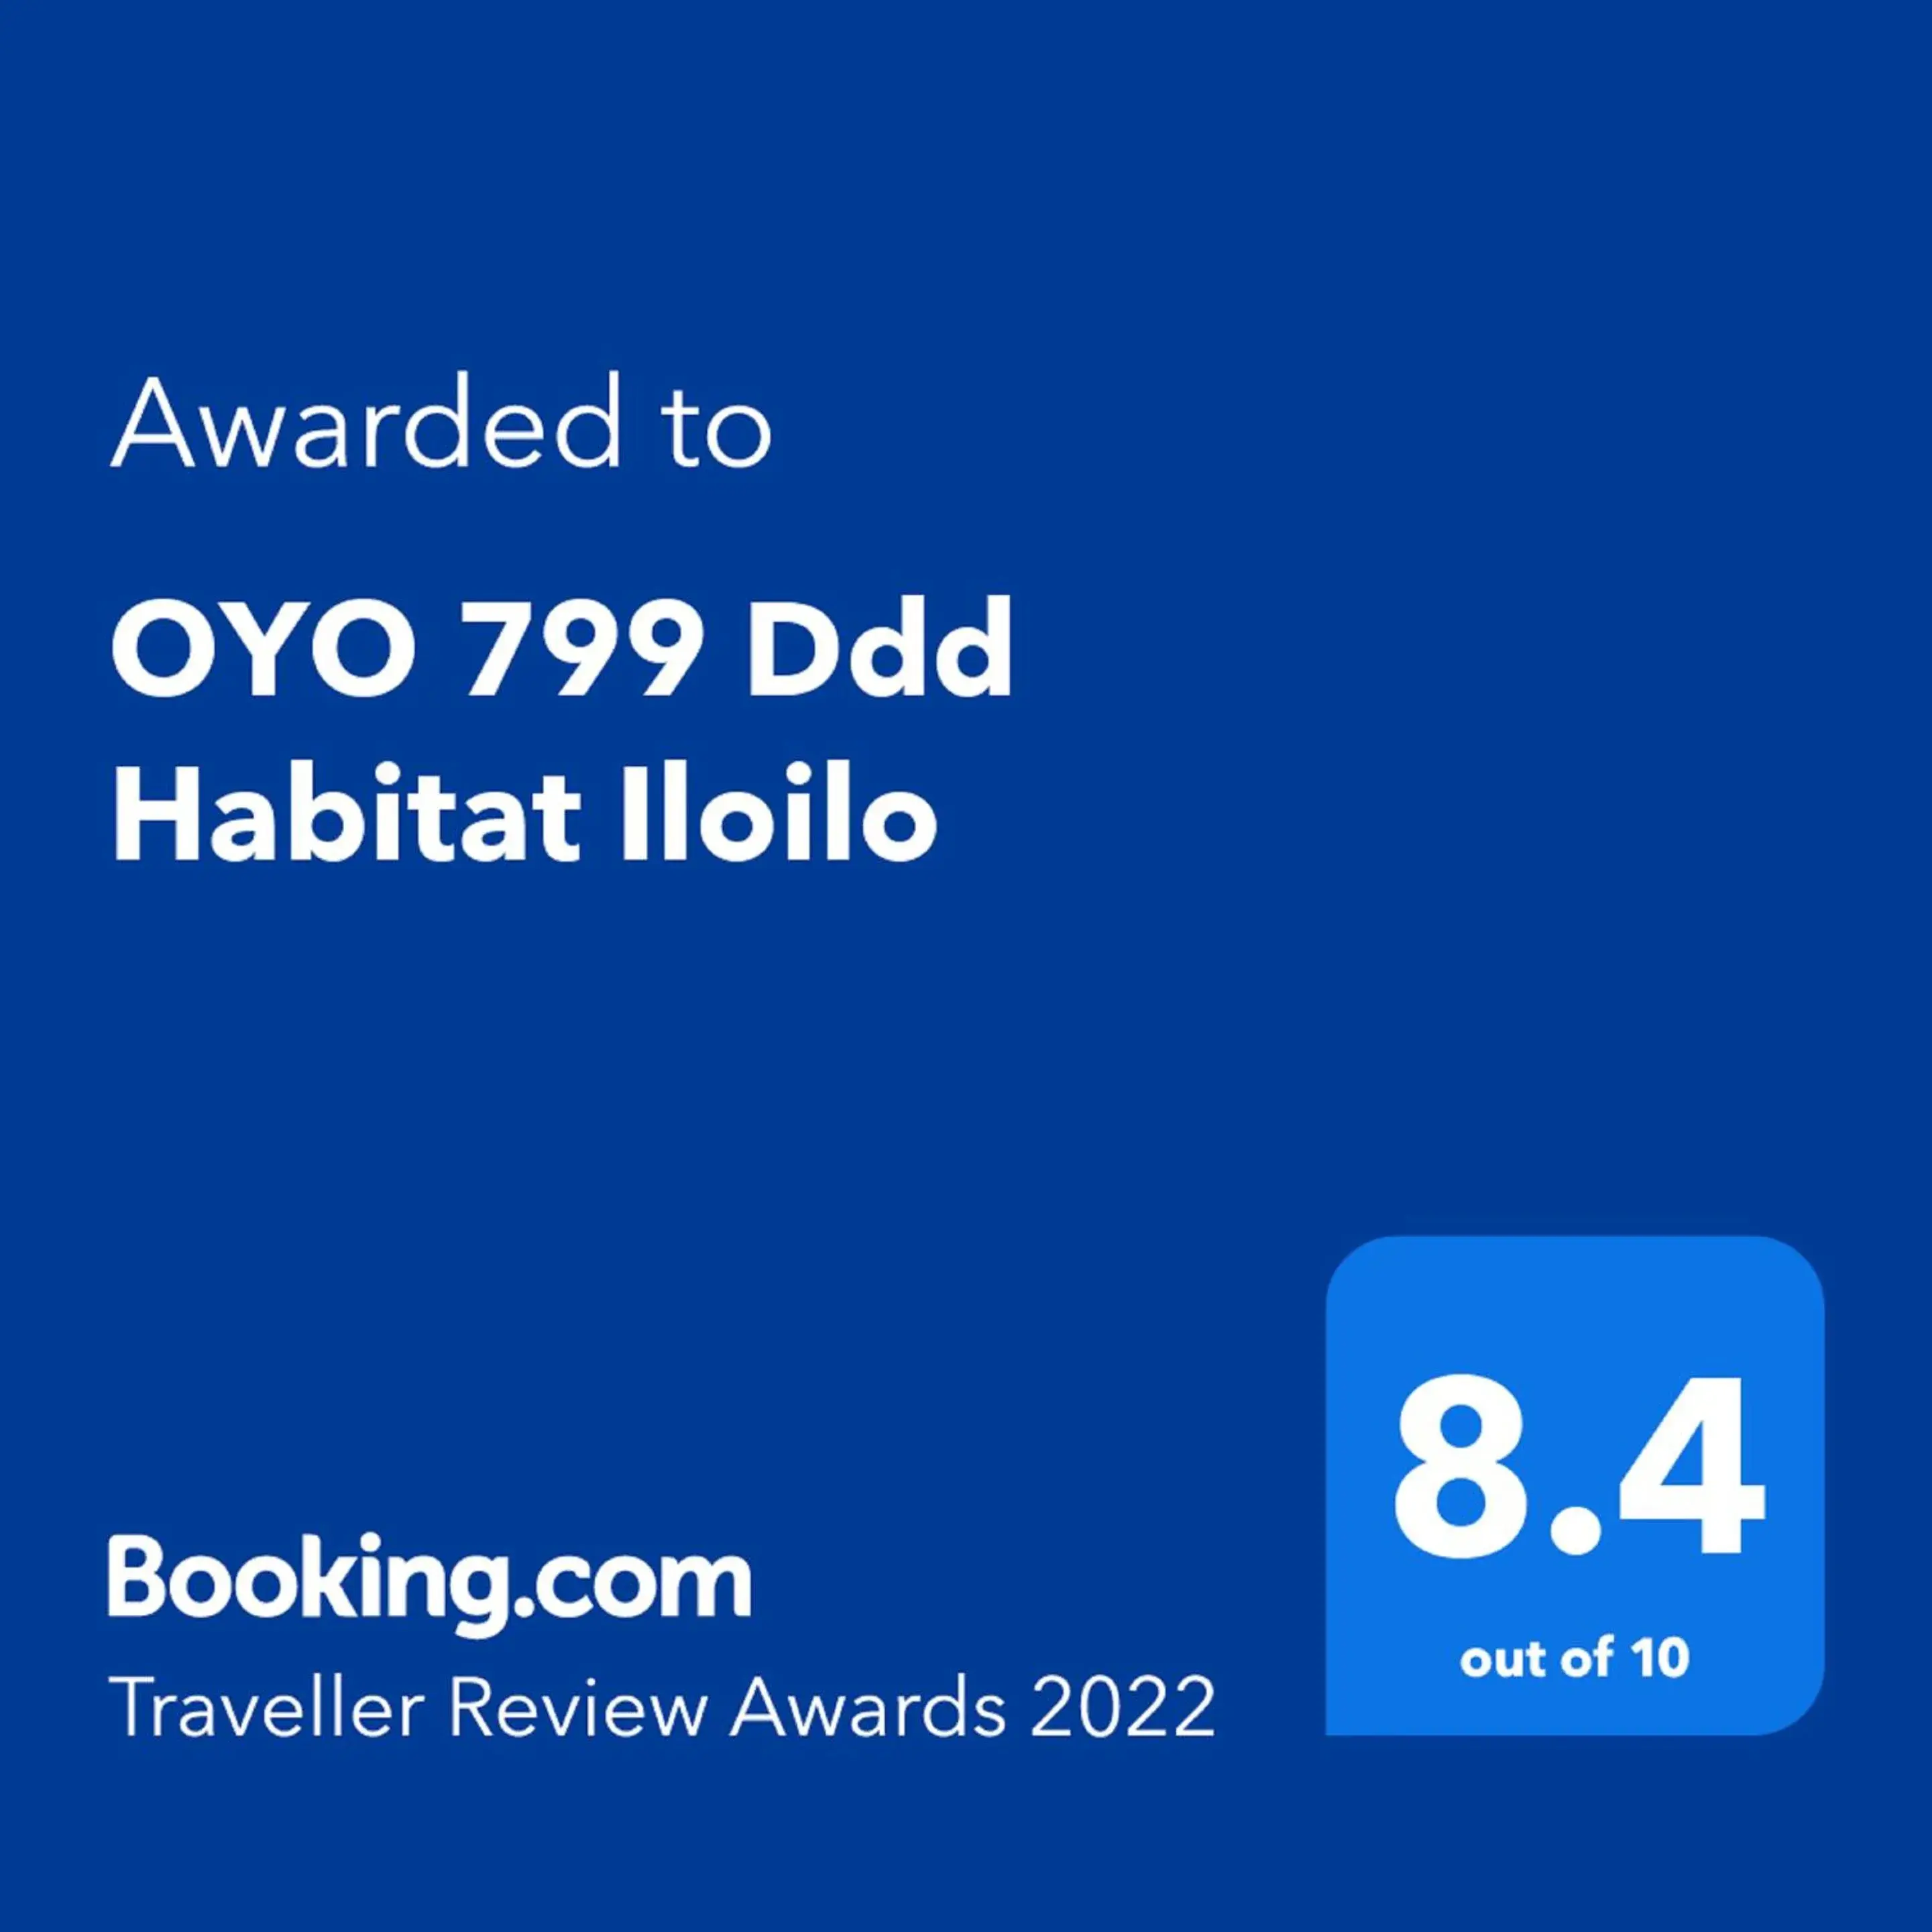 Certificate/Award, Logo/Certificate/Sign/Award in OYO 799 Ddd Habitat Iloilo